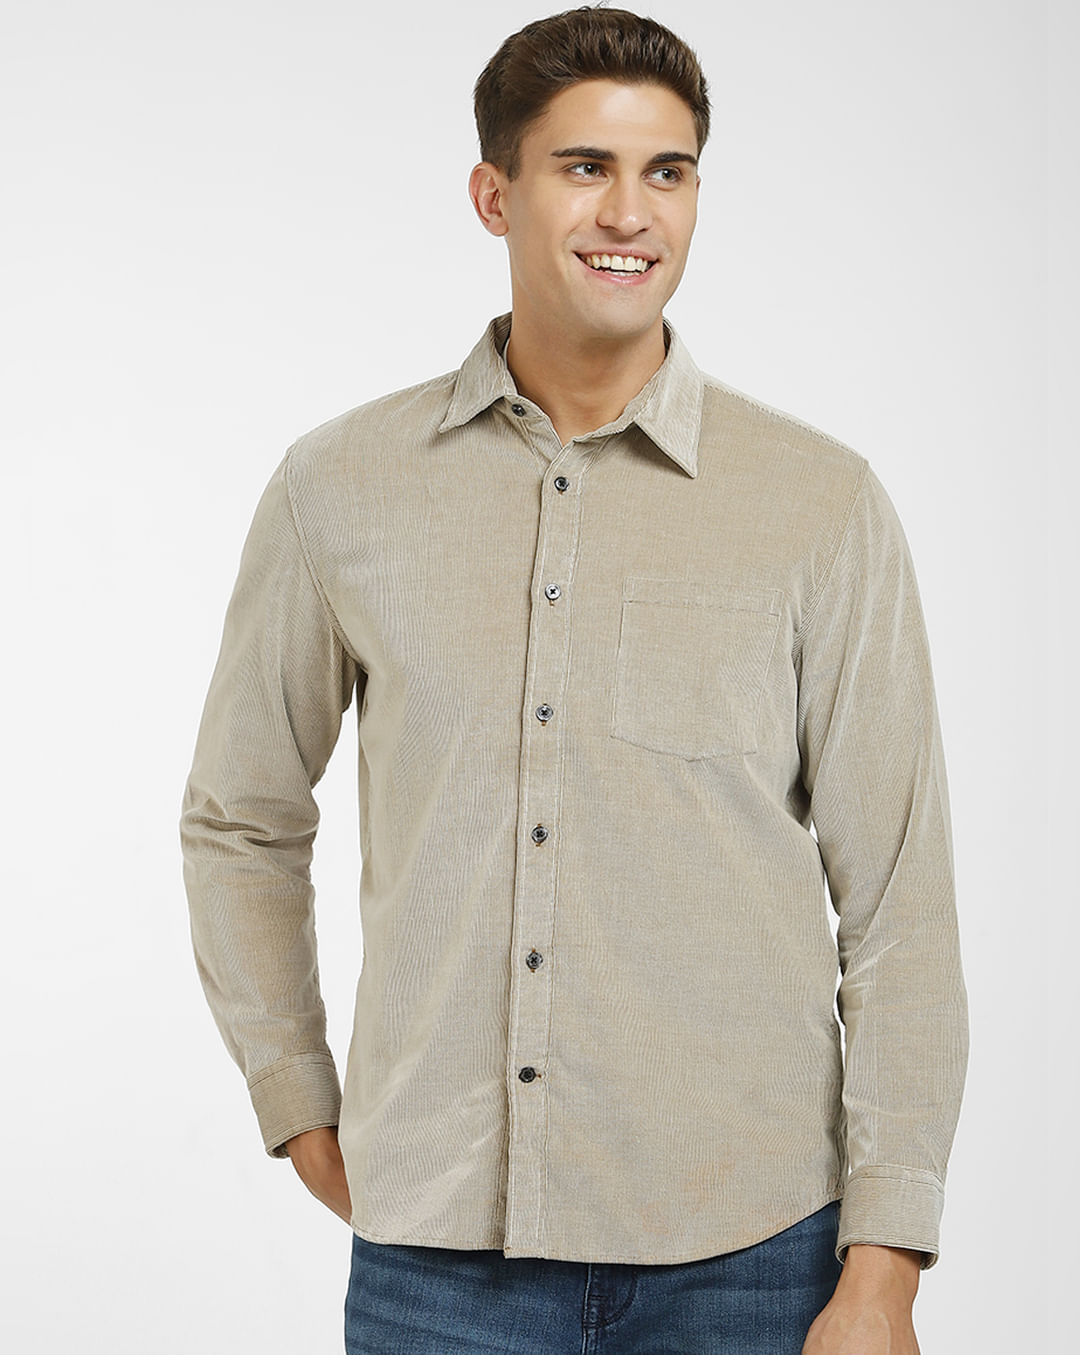 Buy Brown Corduroy Full Sleeves Shirt Online at SELECTED HOMME |256918602